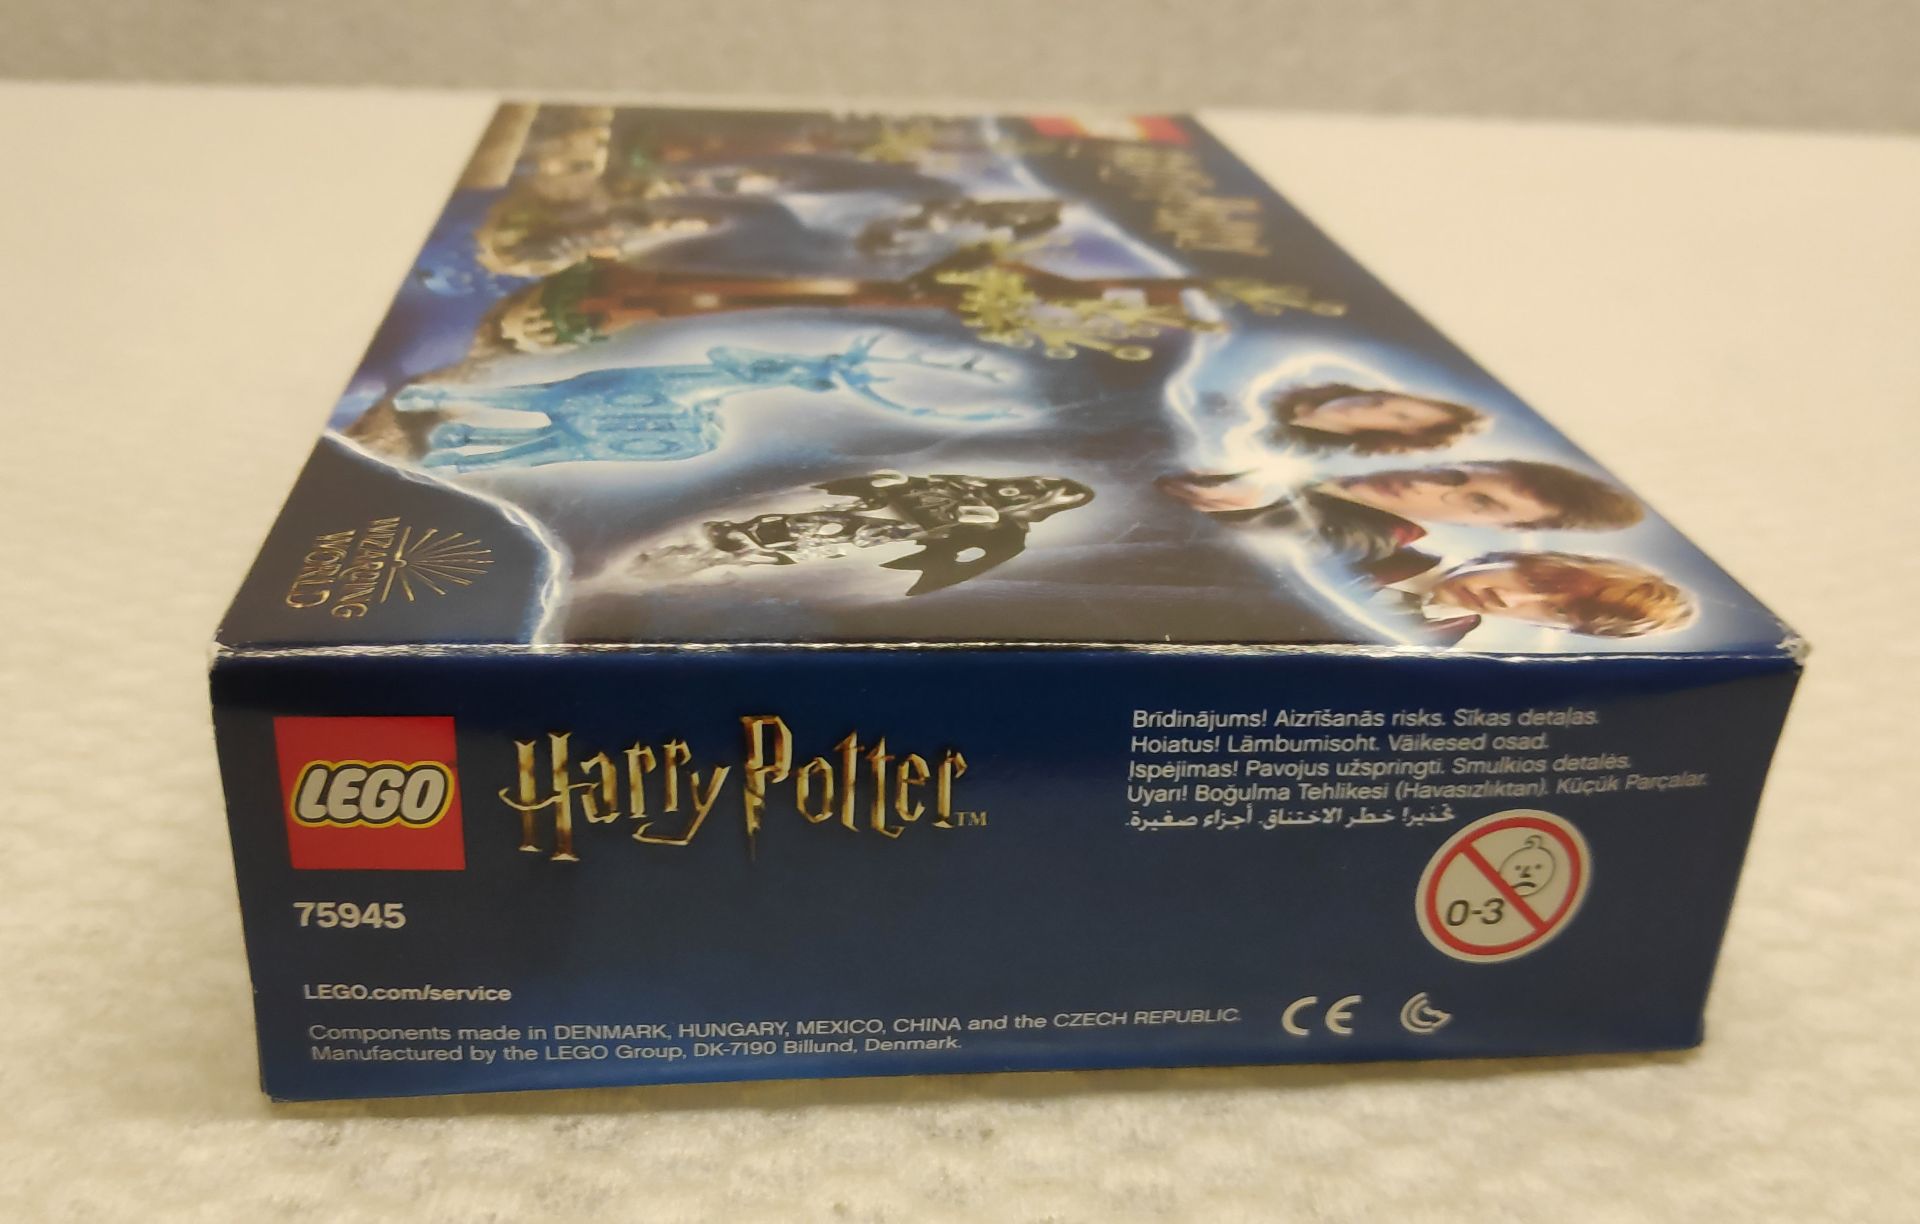 1 x Lego Harry Potter Expecto Patronum Set - New/Boxed - Set # 75945 - Image 7 of 10